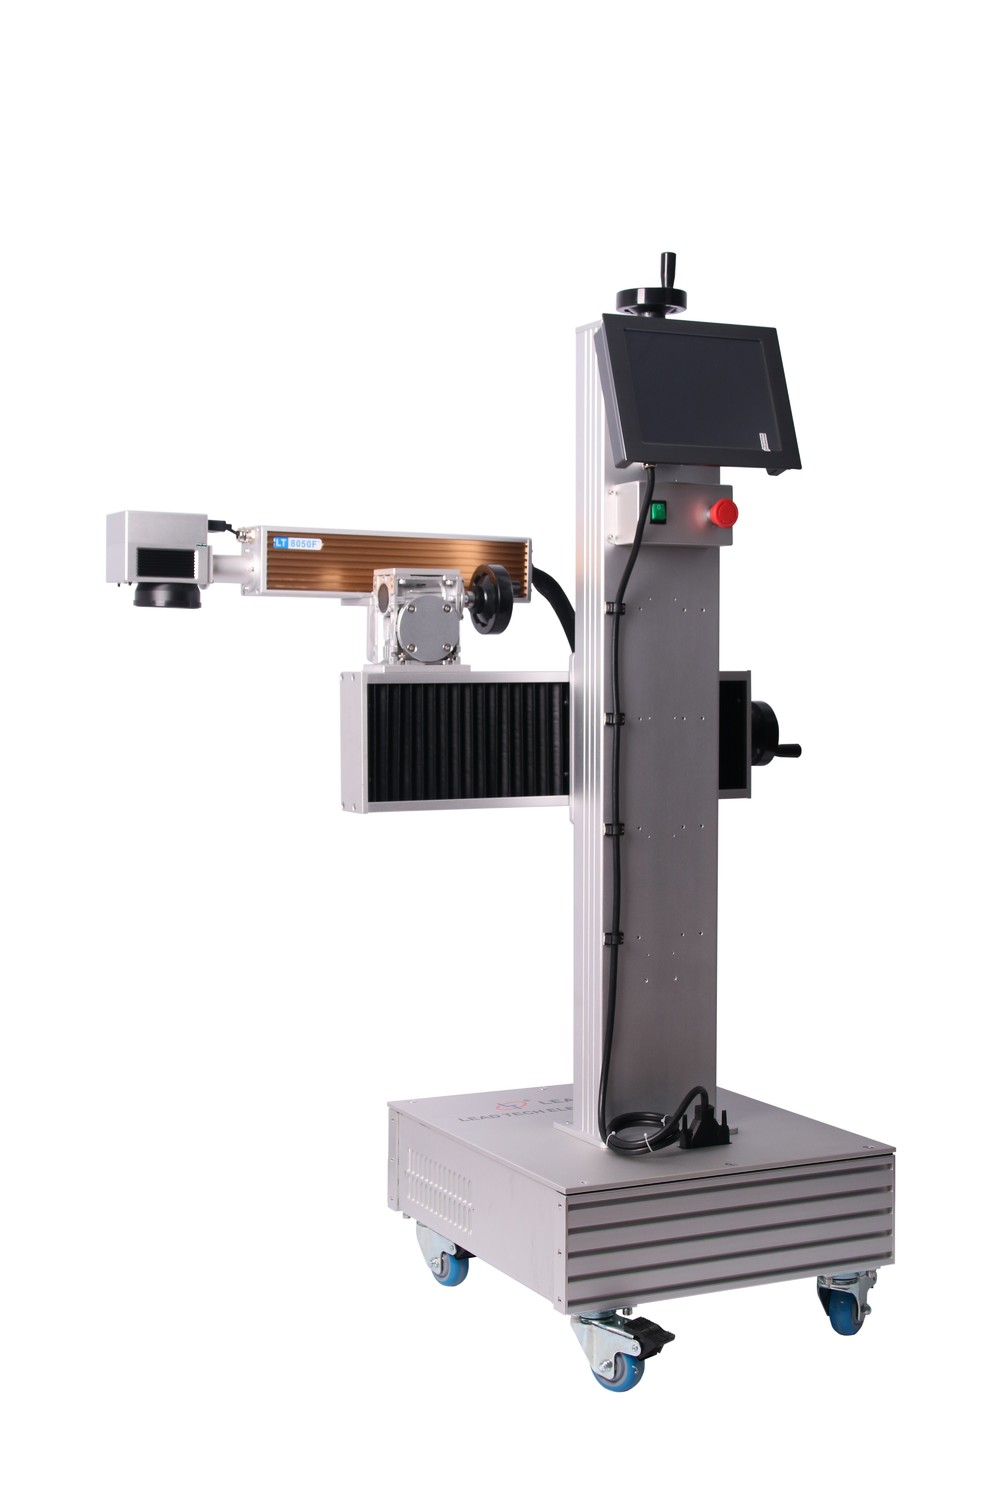 Lt8020f/Lt8030f/Lt8050f Fiber High Performance Digital Laser Marking Printer for Plate Silver Gold Printing